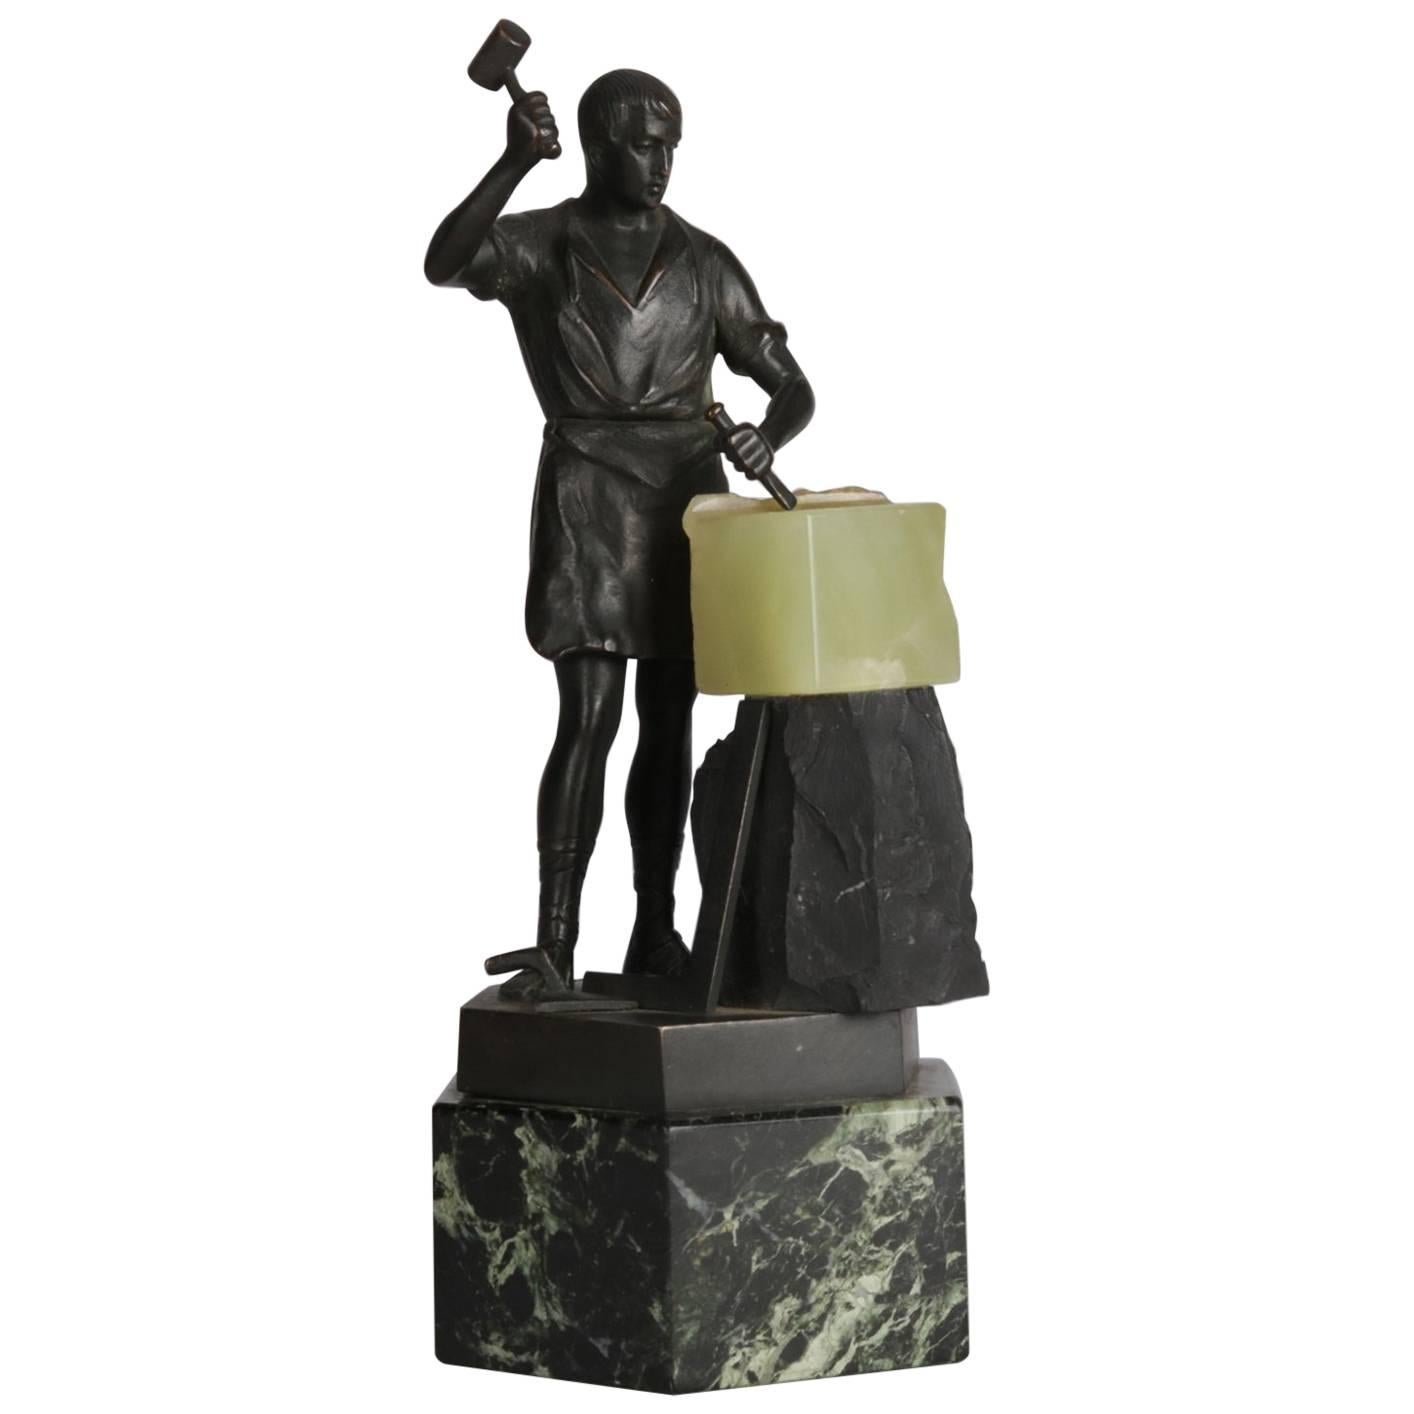 Figural Cast Bronze Portrait Sculpture of Classical "Self-Made Man", Signed Kerk